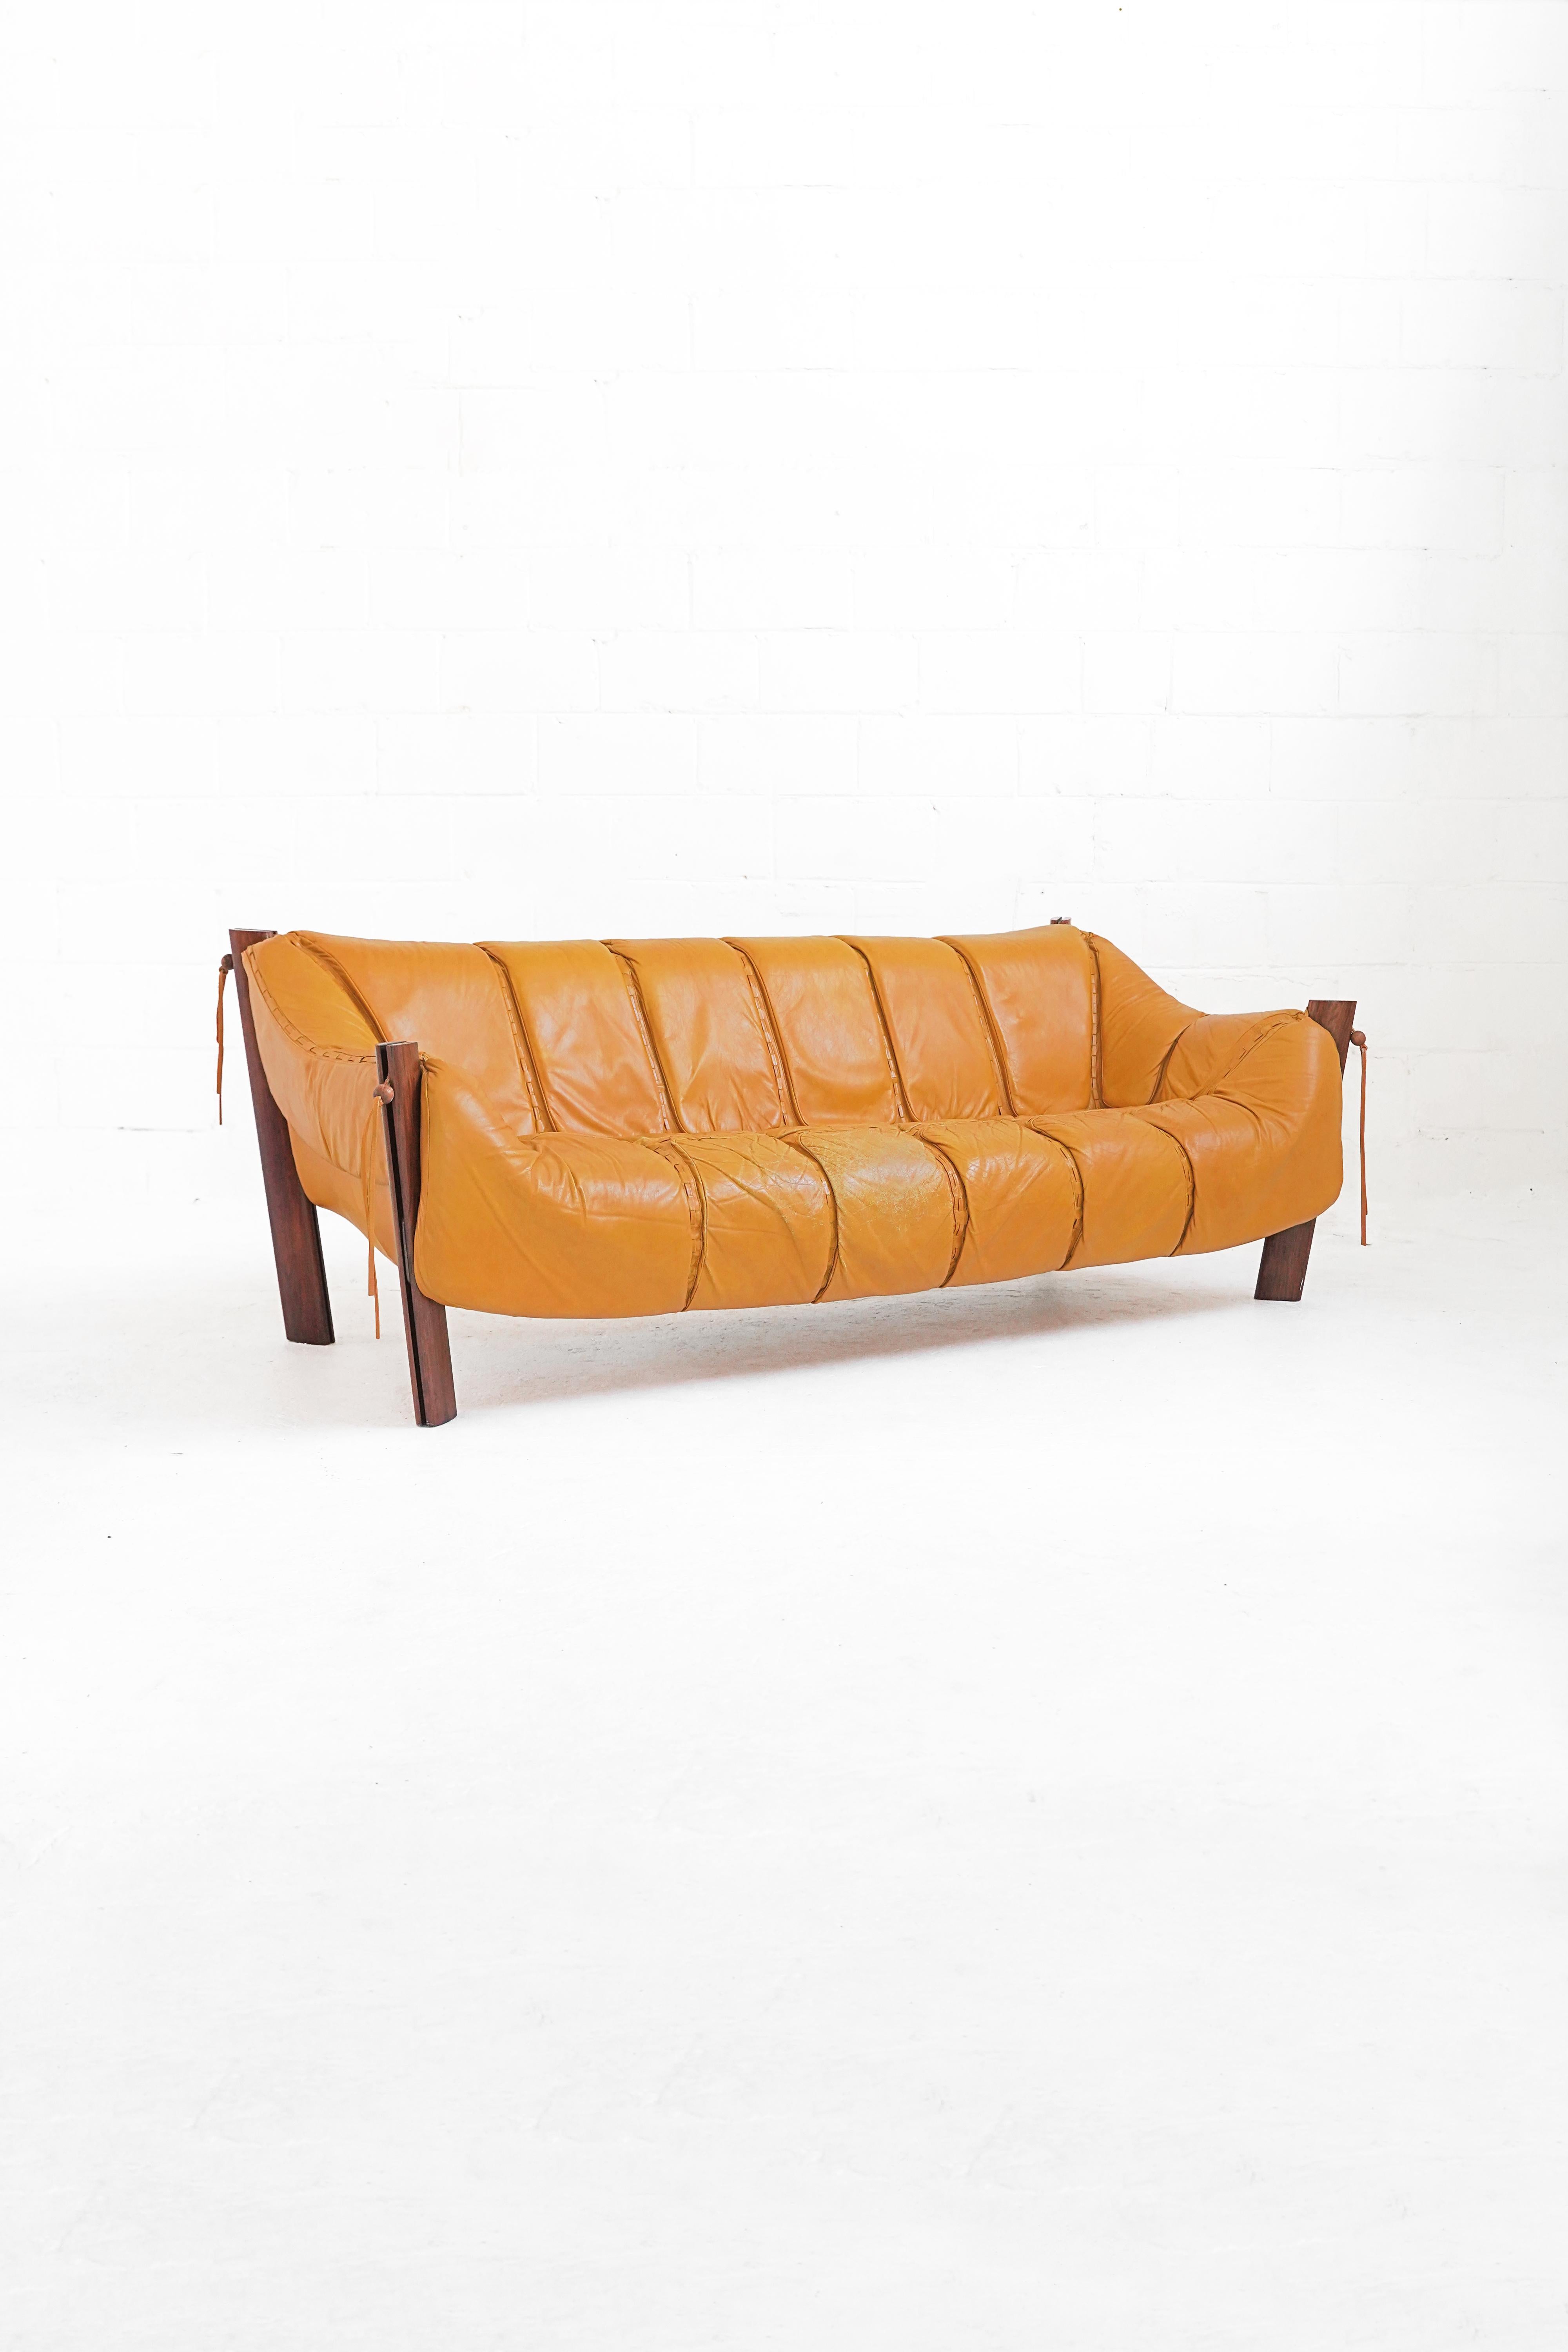 MP-211 Lounge Chair by Brazilian Designer Percival Lafer for Móveis Lafer 11